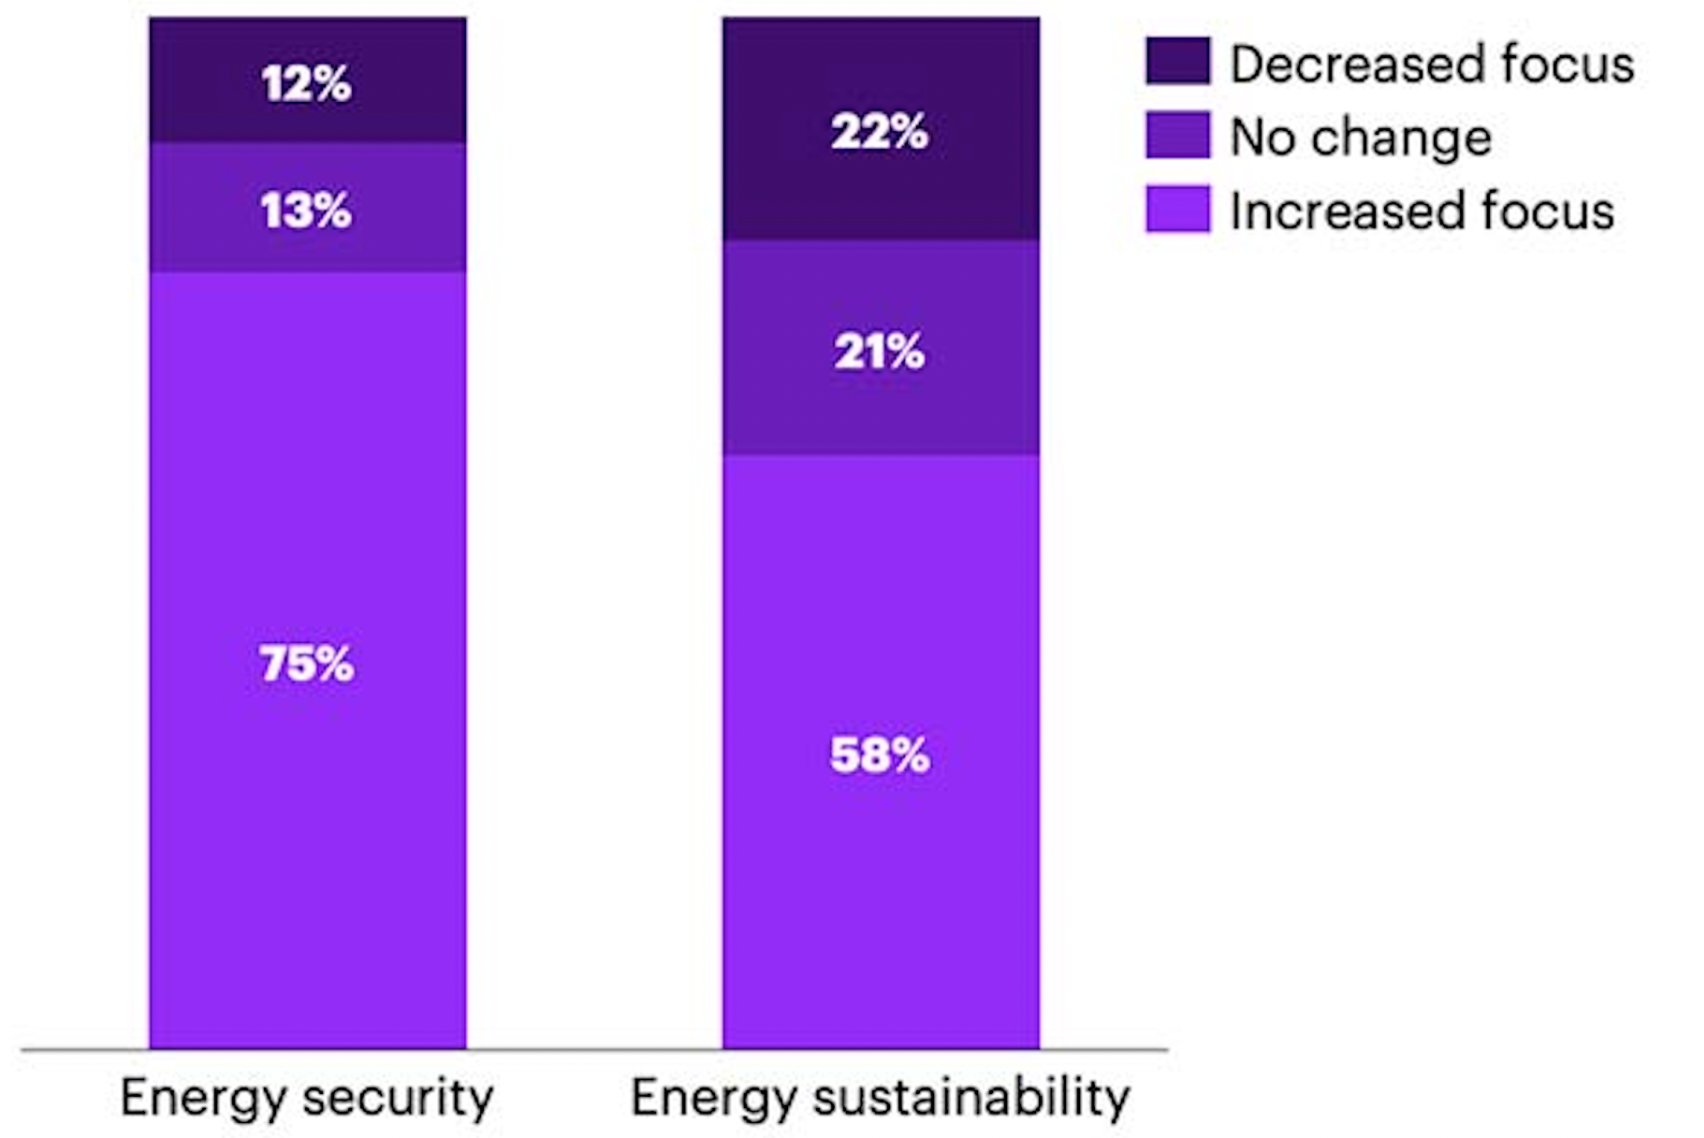 Energy Security, Energy Sustainability, 12%, 13%, 75%, 22%, 21%, 58%, Decreased focus, No change, Increased Focus